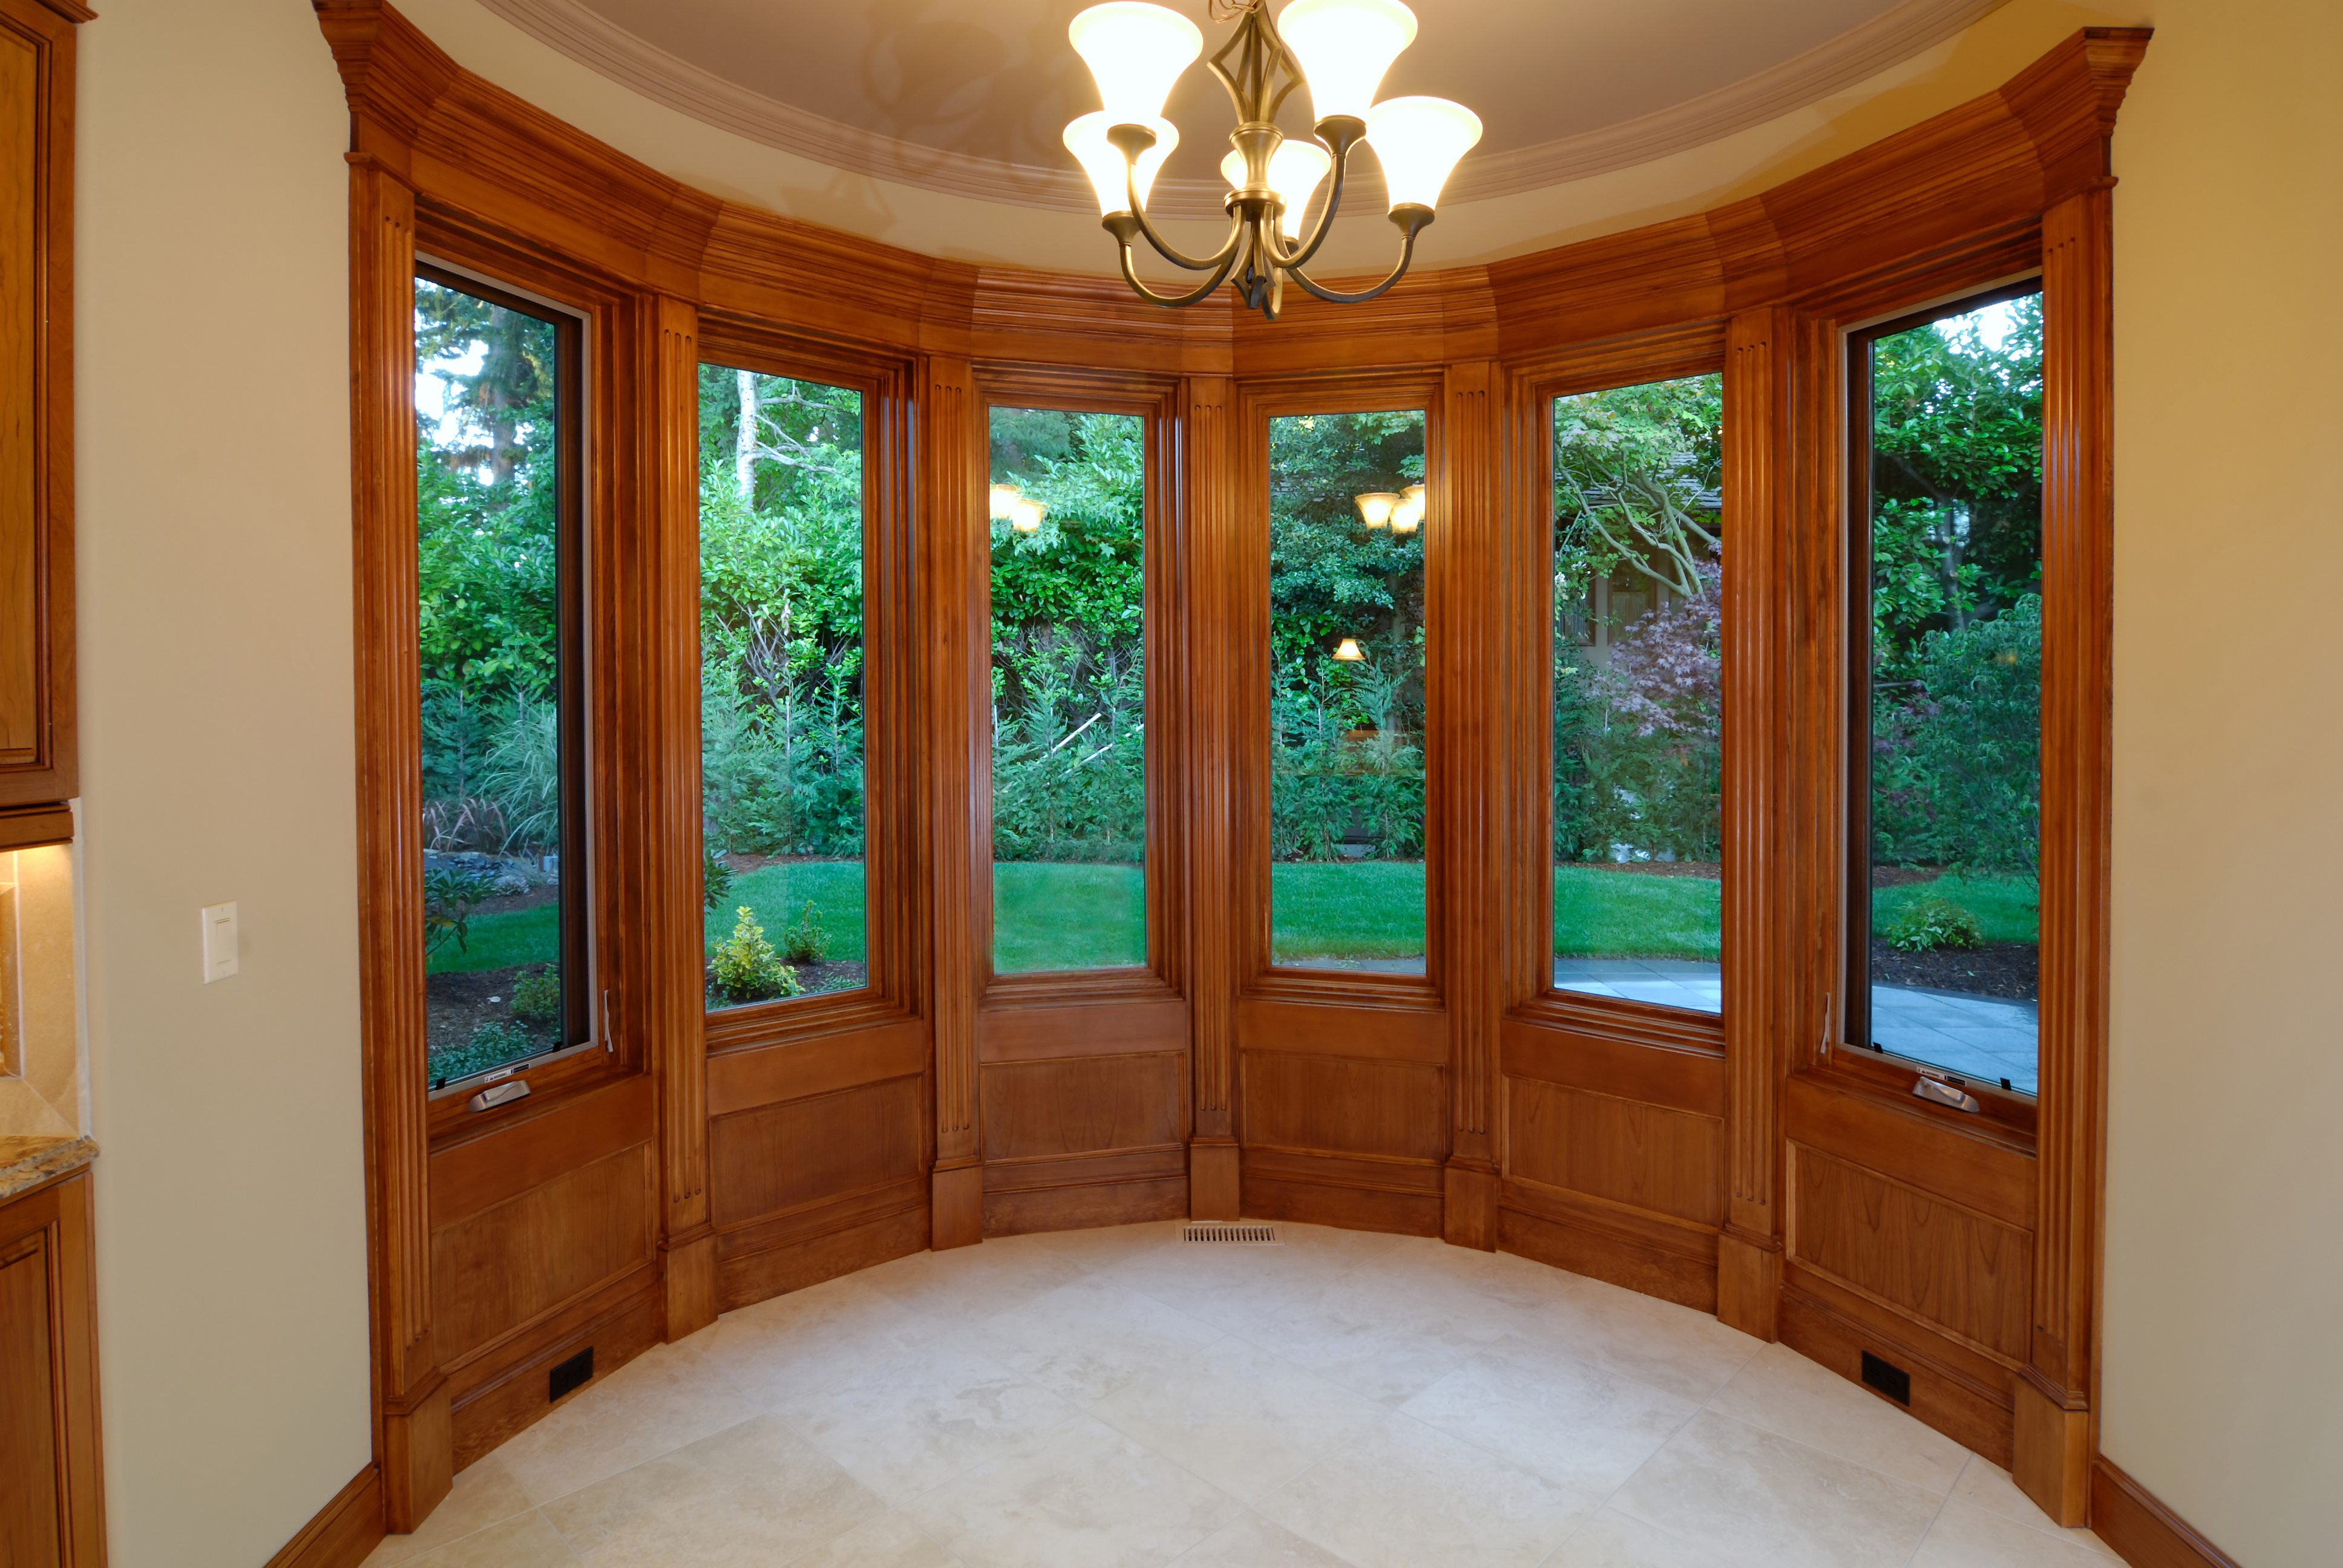 Major Window Types in Luxury Homes